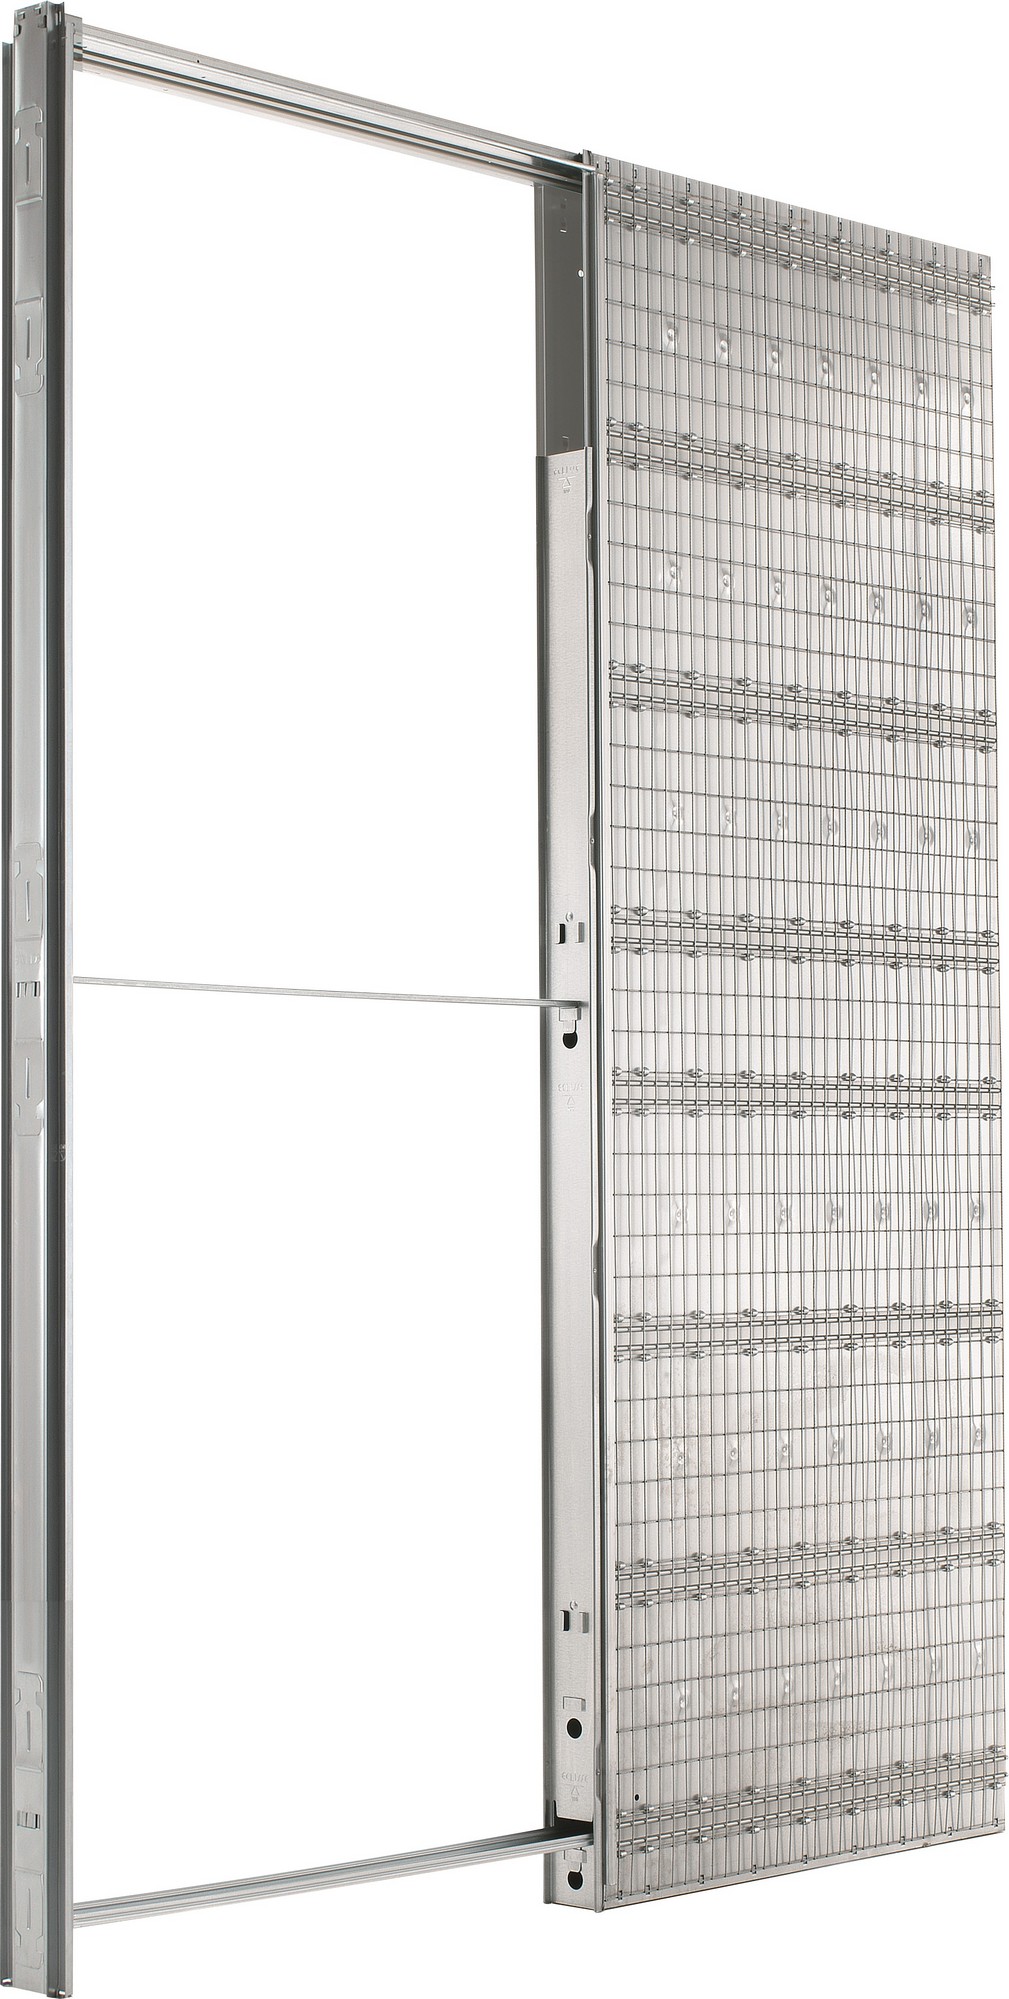 Pouzdro Eclisse Standard 700/2100 mm do zdiva tl. 125 mm